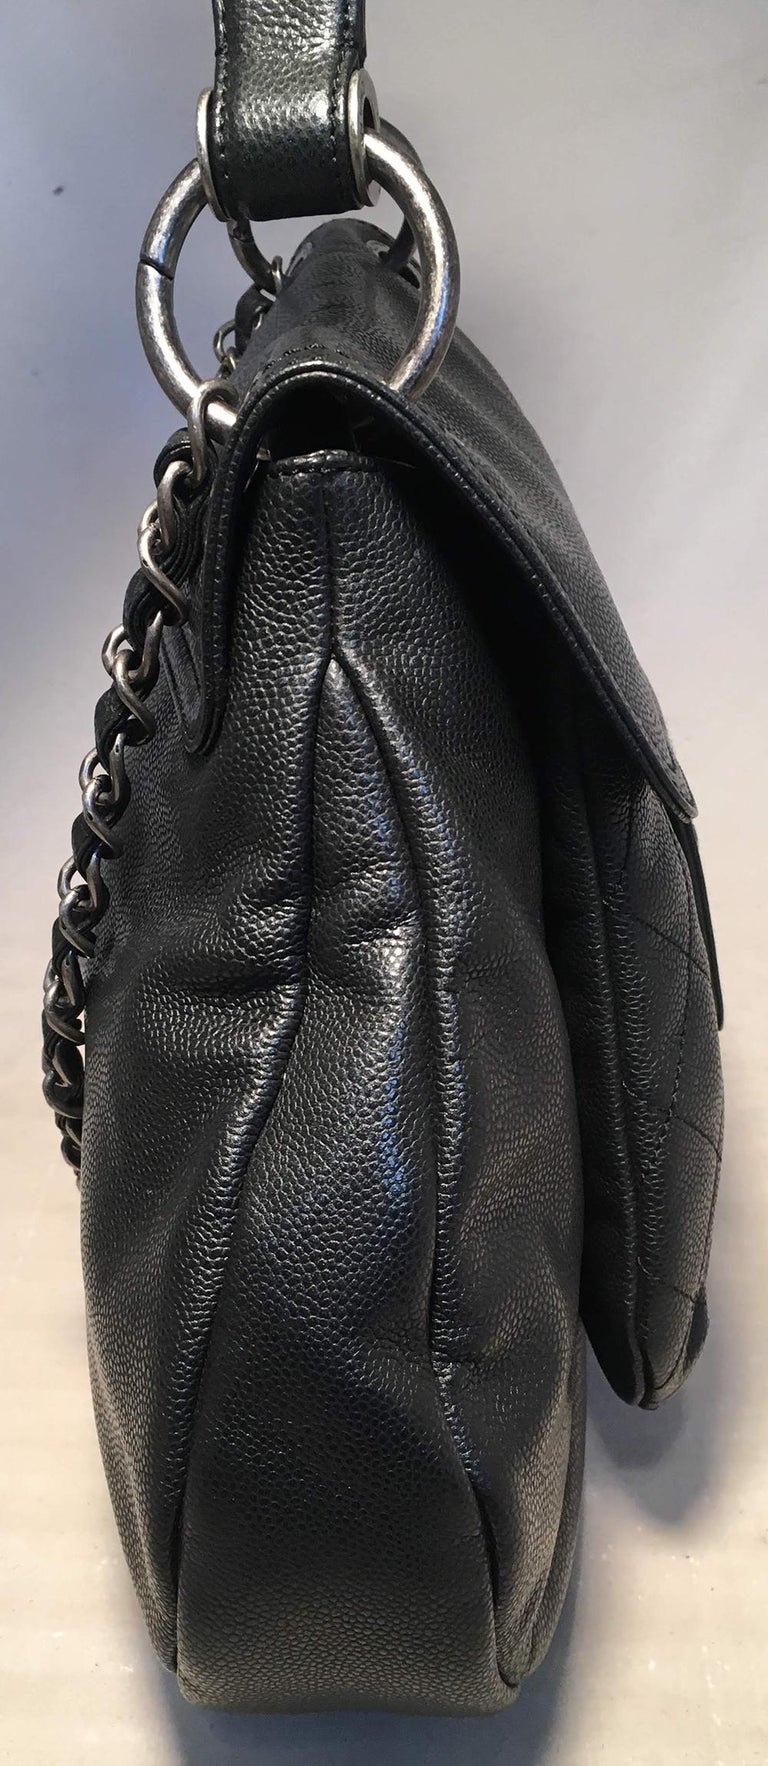 chanel caviar leather